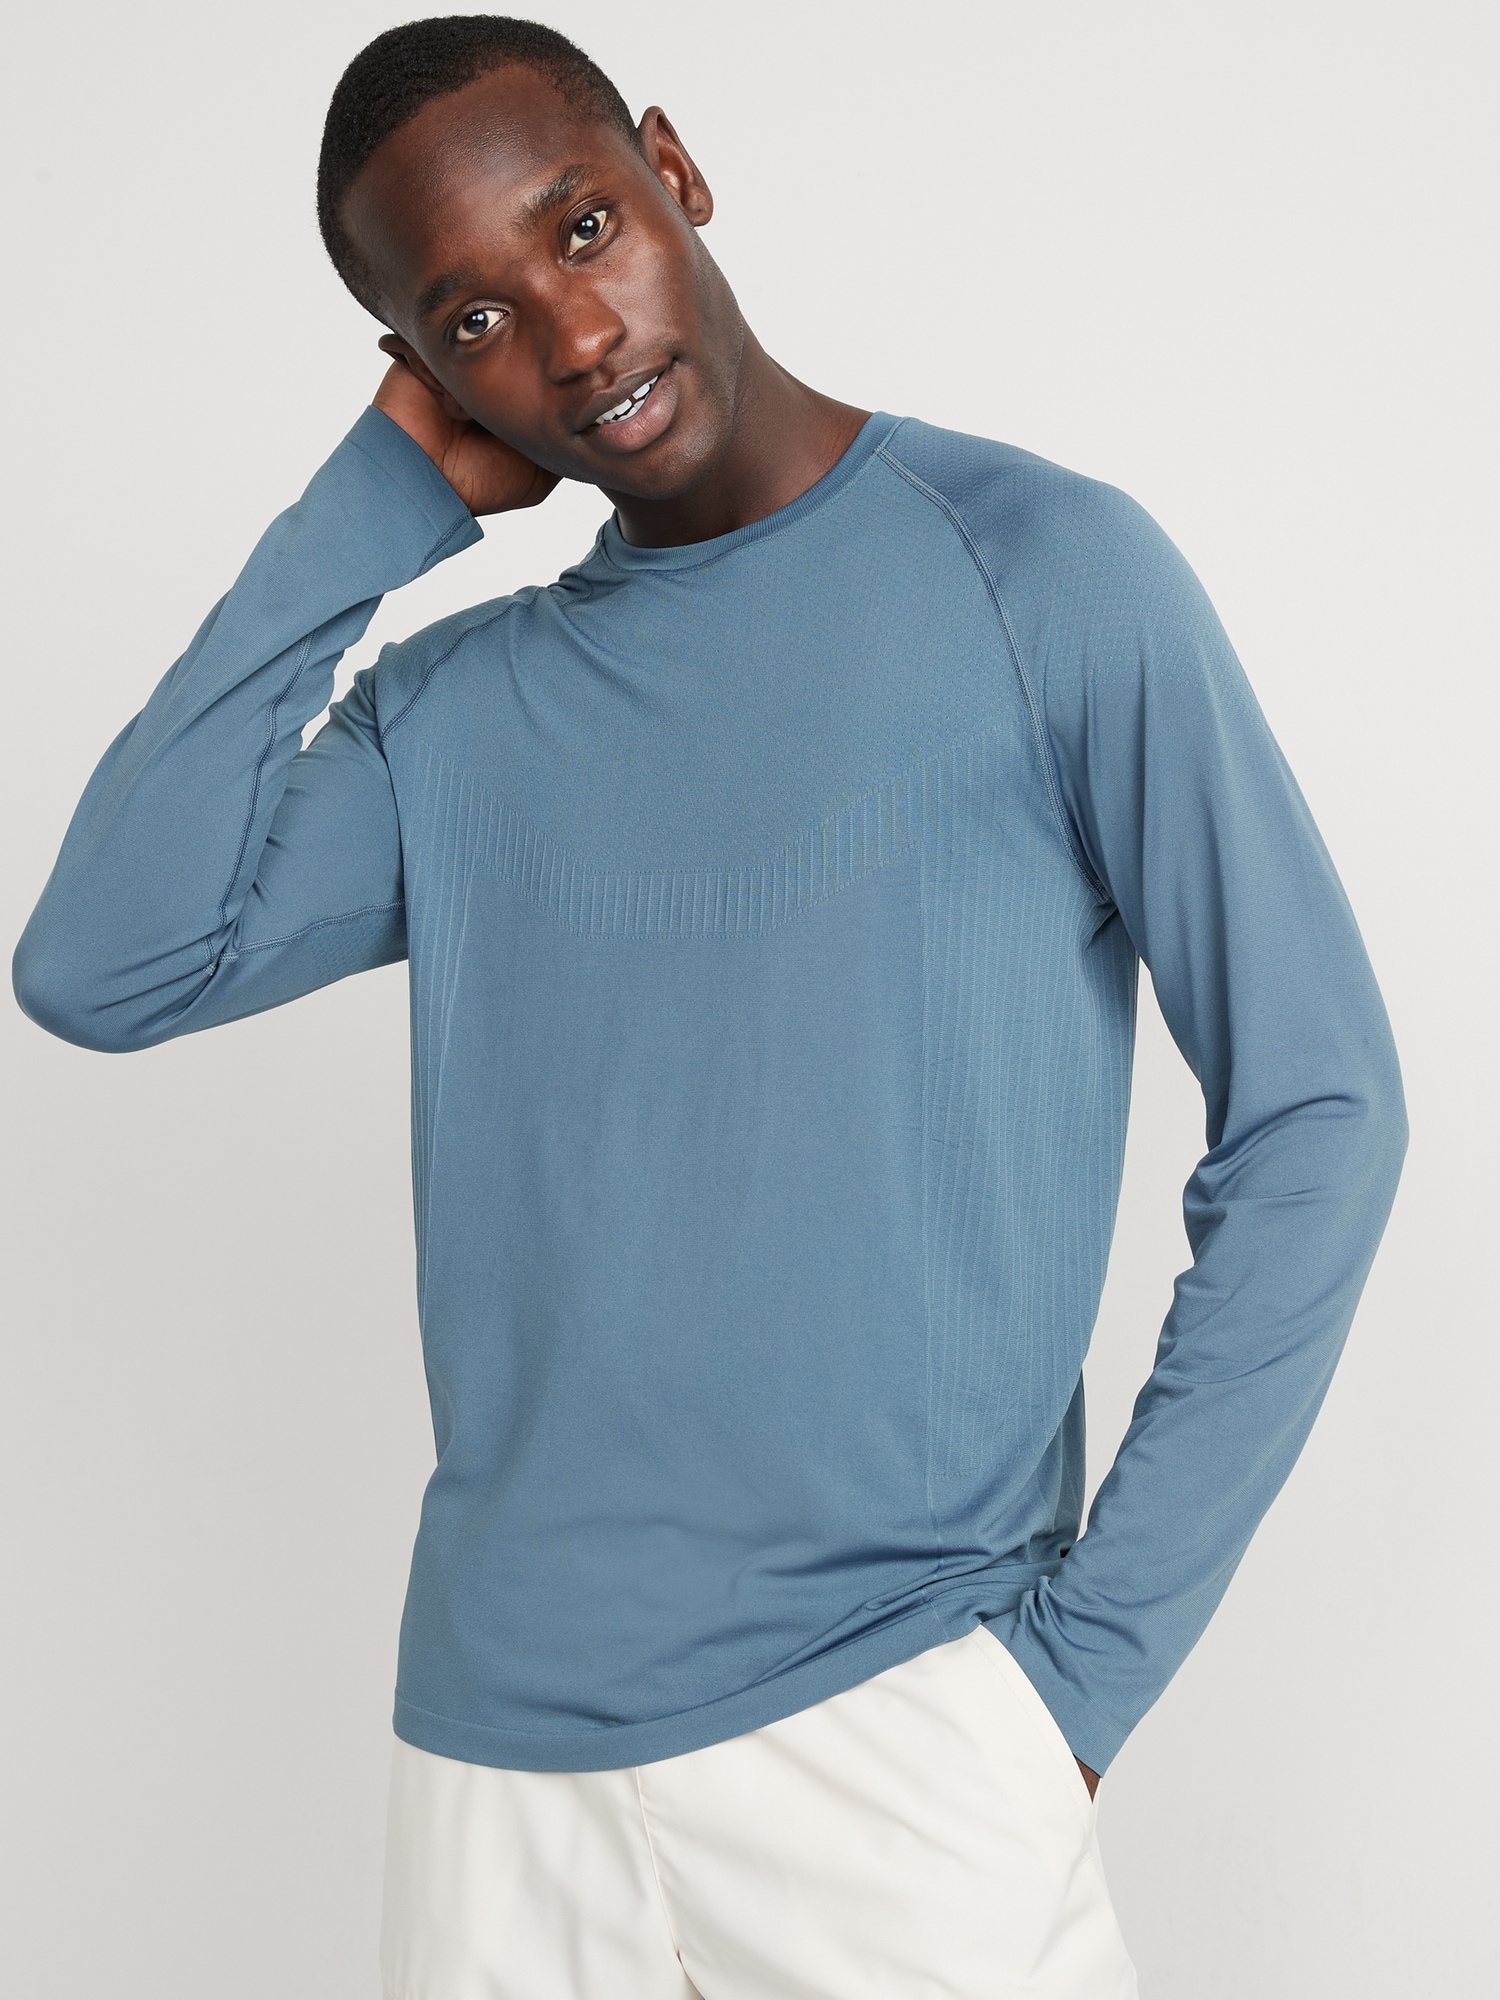 Go-Fresh Odor-Control Seamless Long-Sleeve T-Shirt for Men